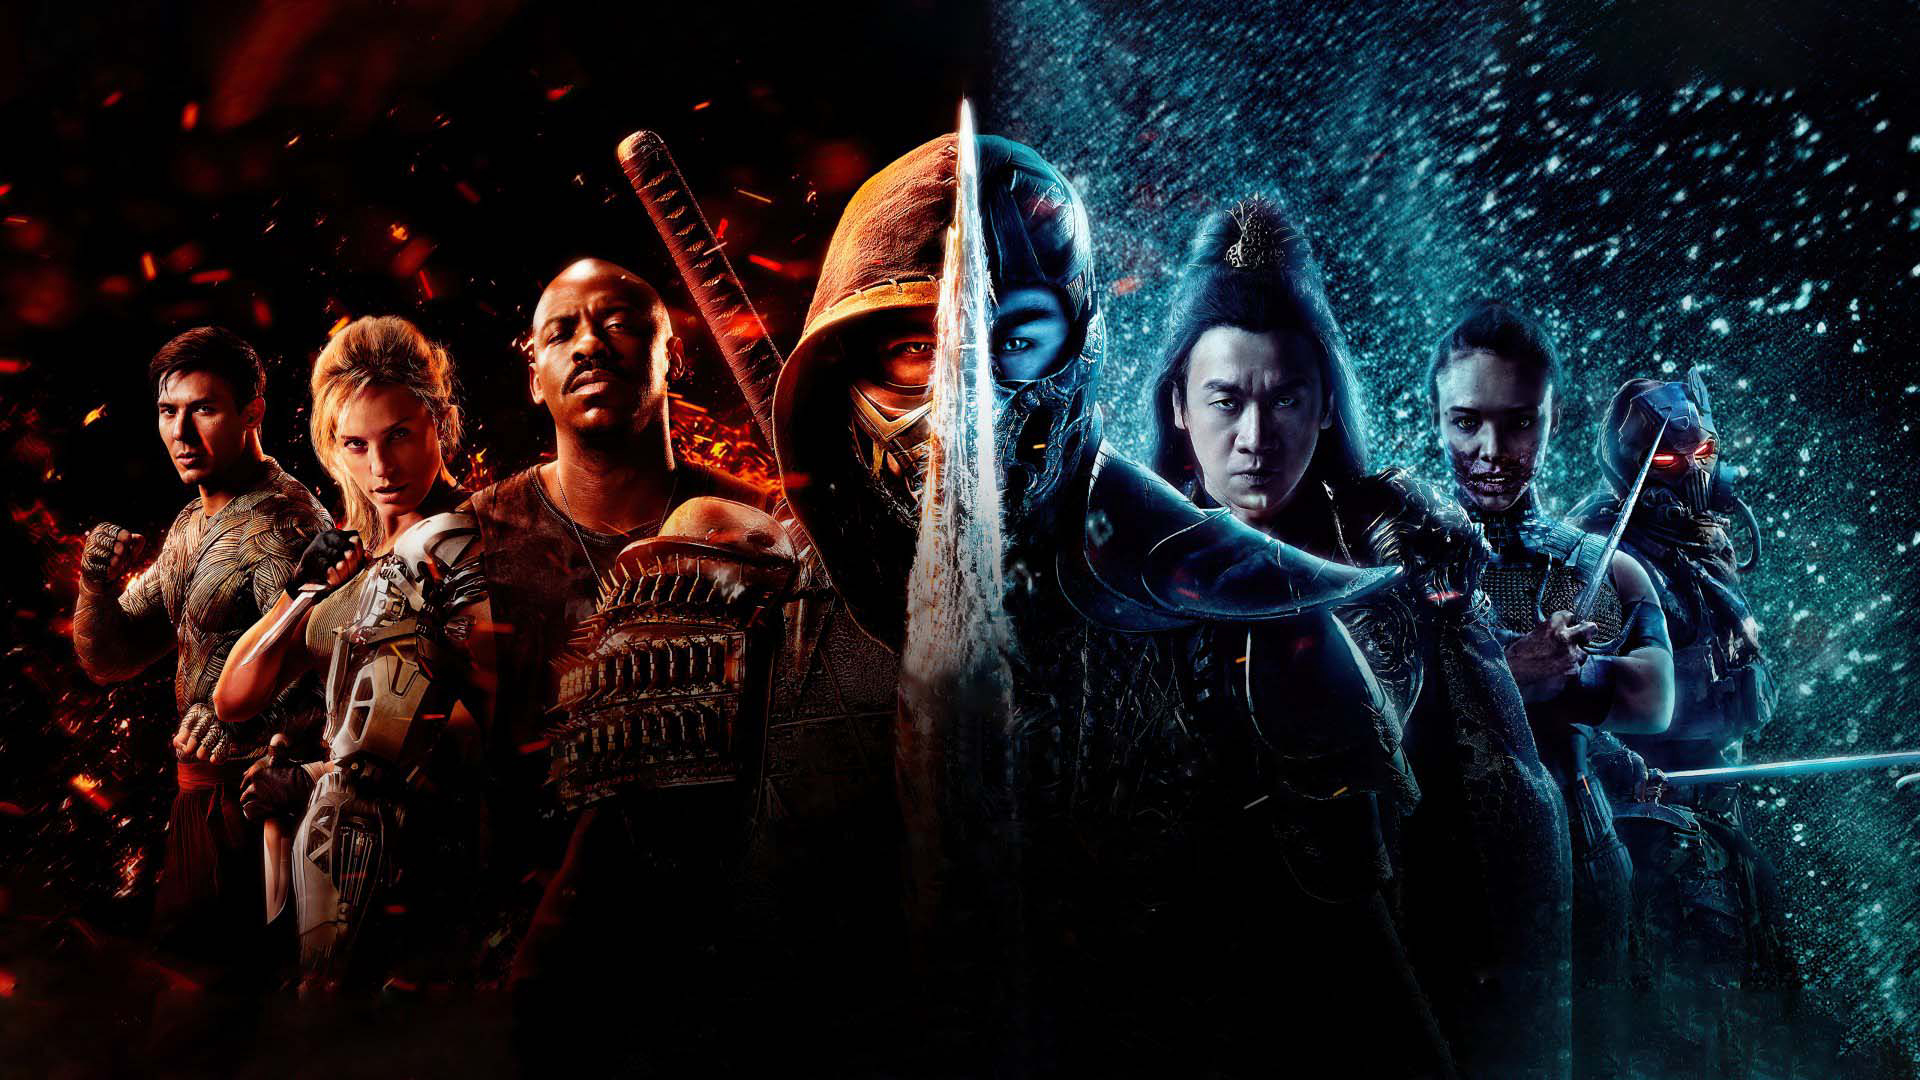 Banner Phim Mortal Kombat: Đấu Trường Sinh Tử (Mortal Kombat)